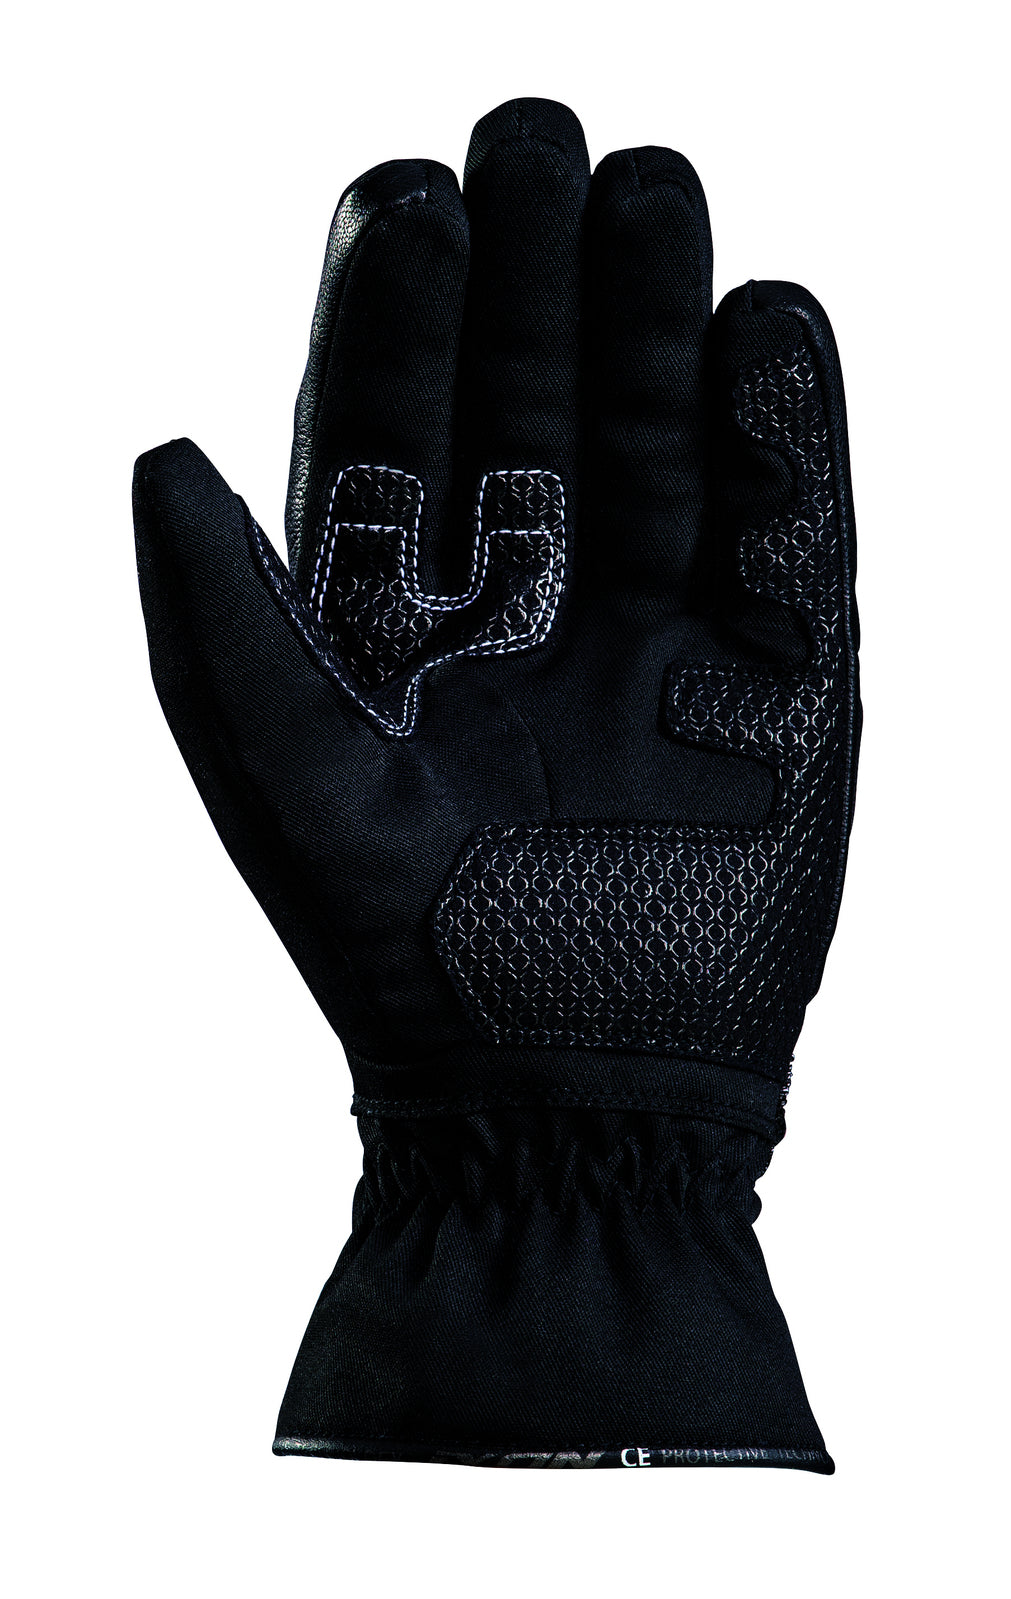 Ixon Pro Indy Kid Gloves - Black/White